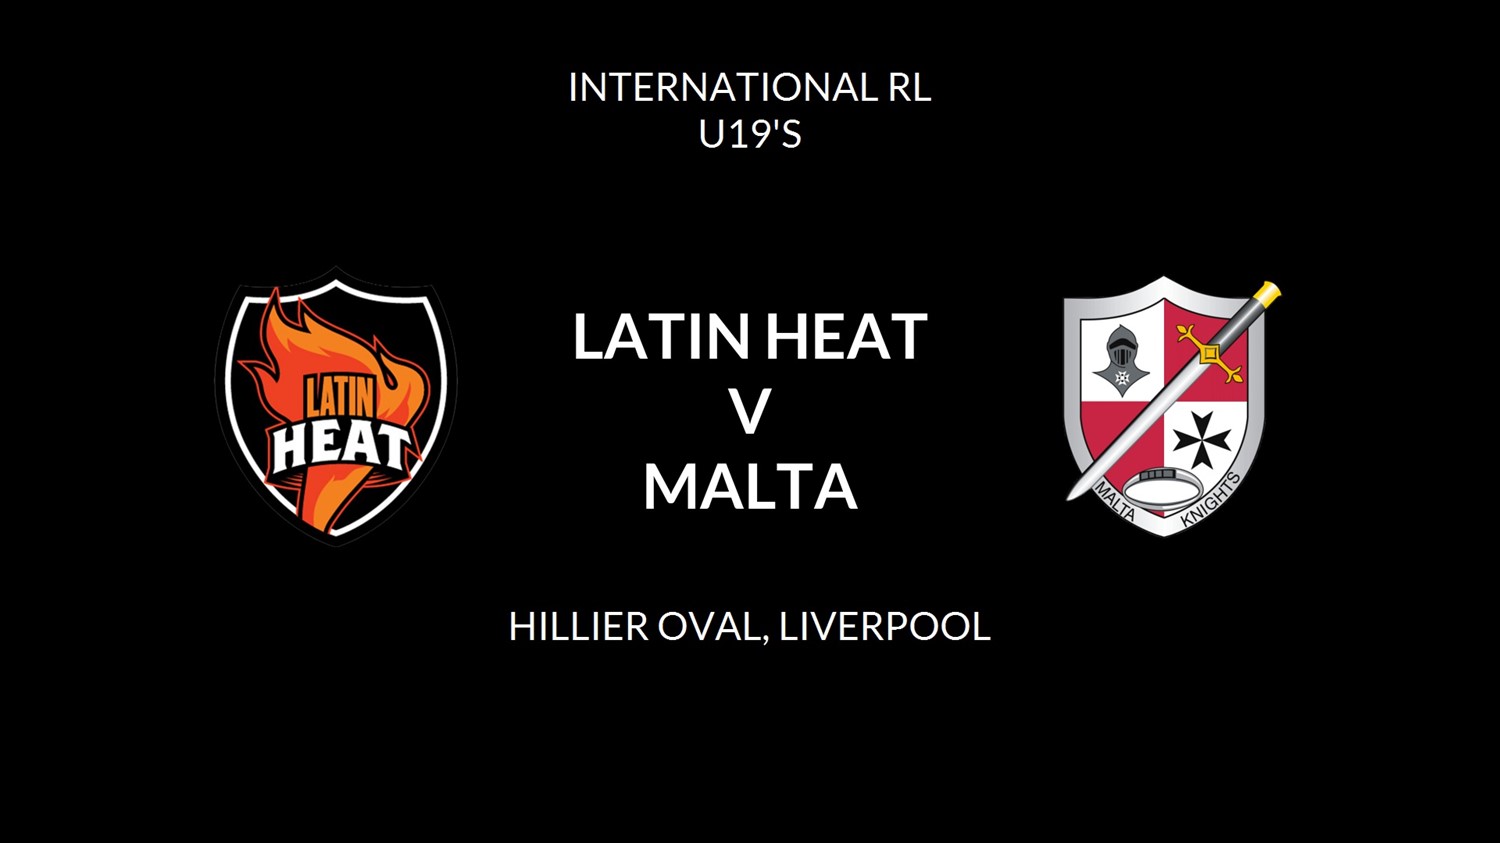 International RL U19's - Latin Heat v Malta Minigame Slate Image